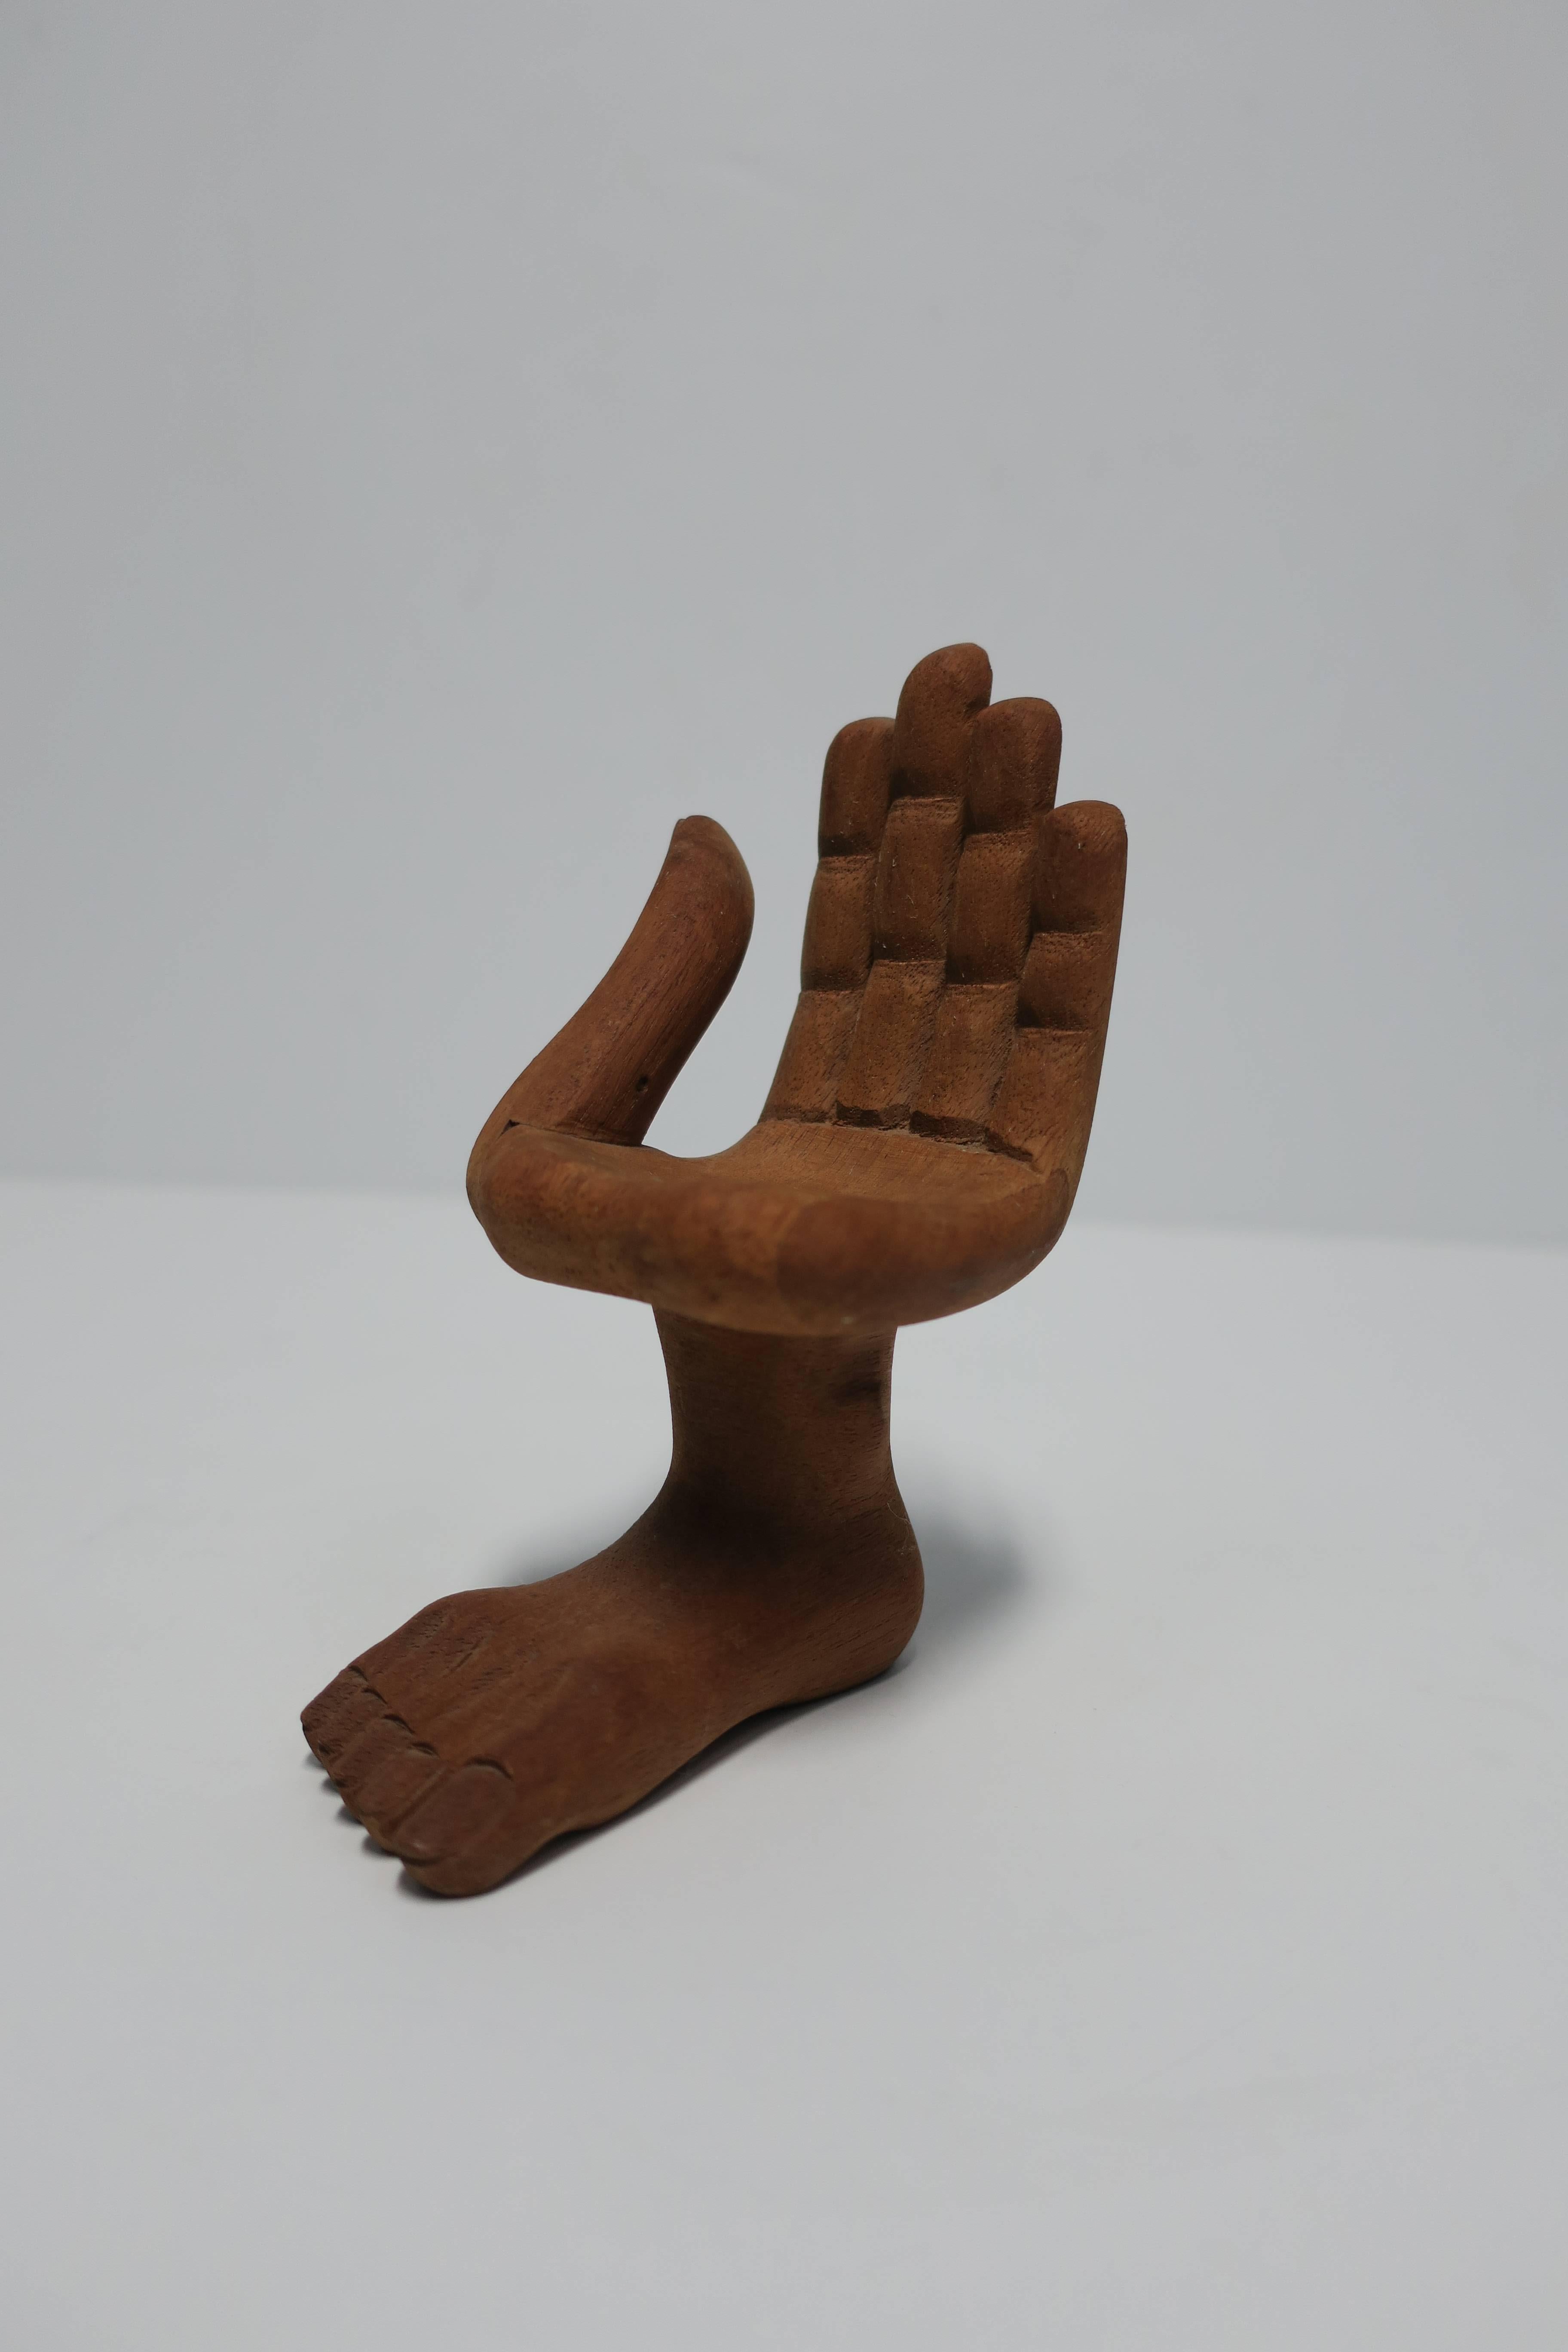 Pedro Friedeberg Hand Chair Decorative Object Sculpture 1